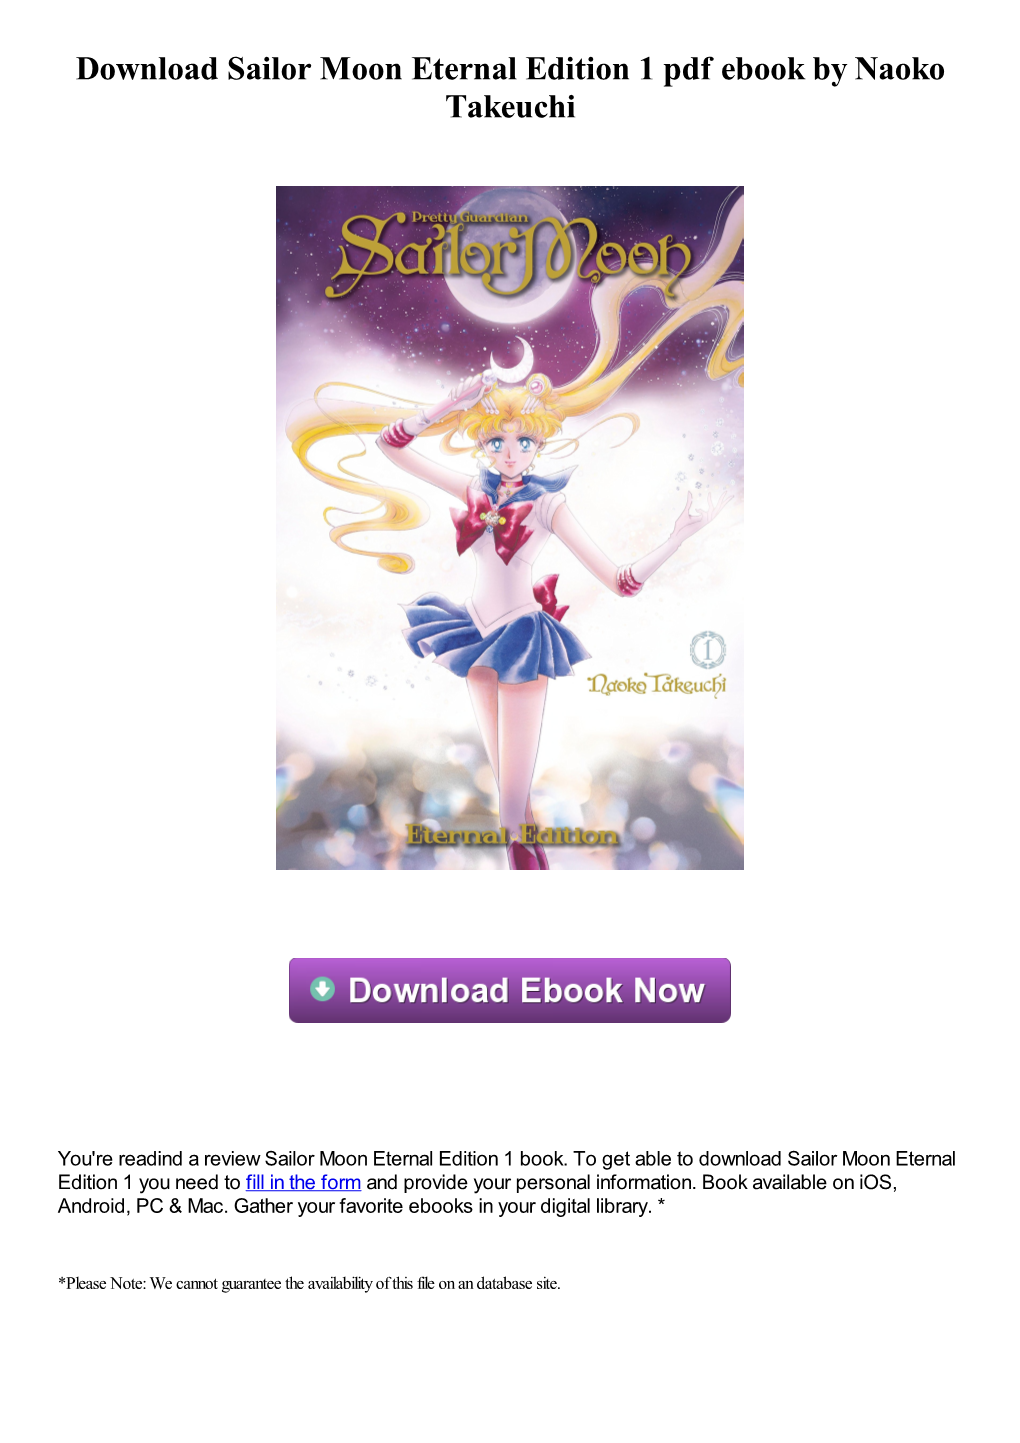 Download Sailor Moon Eternal Edition 1 Pdf Ebook by Naoko Takeuchi